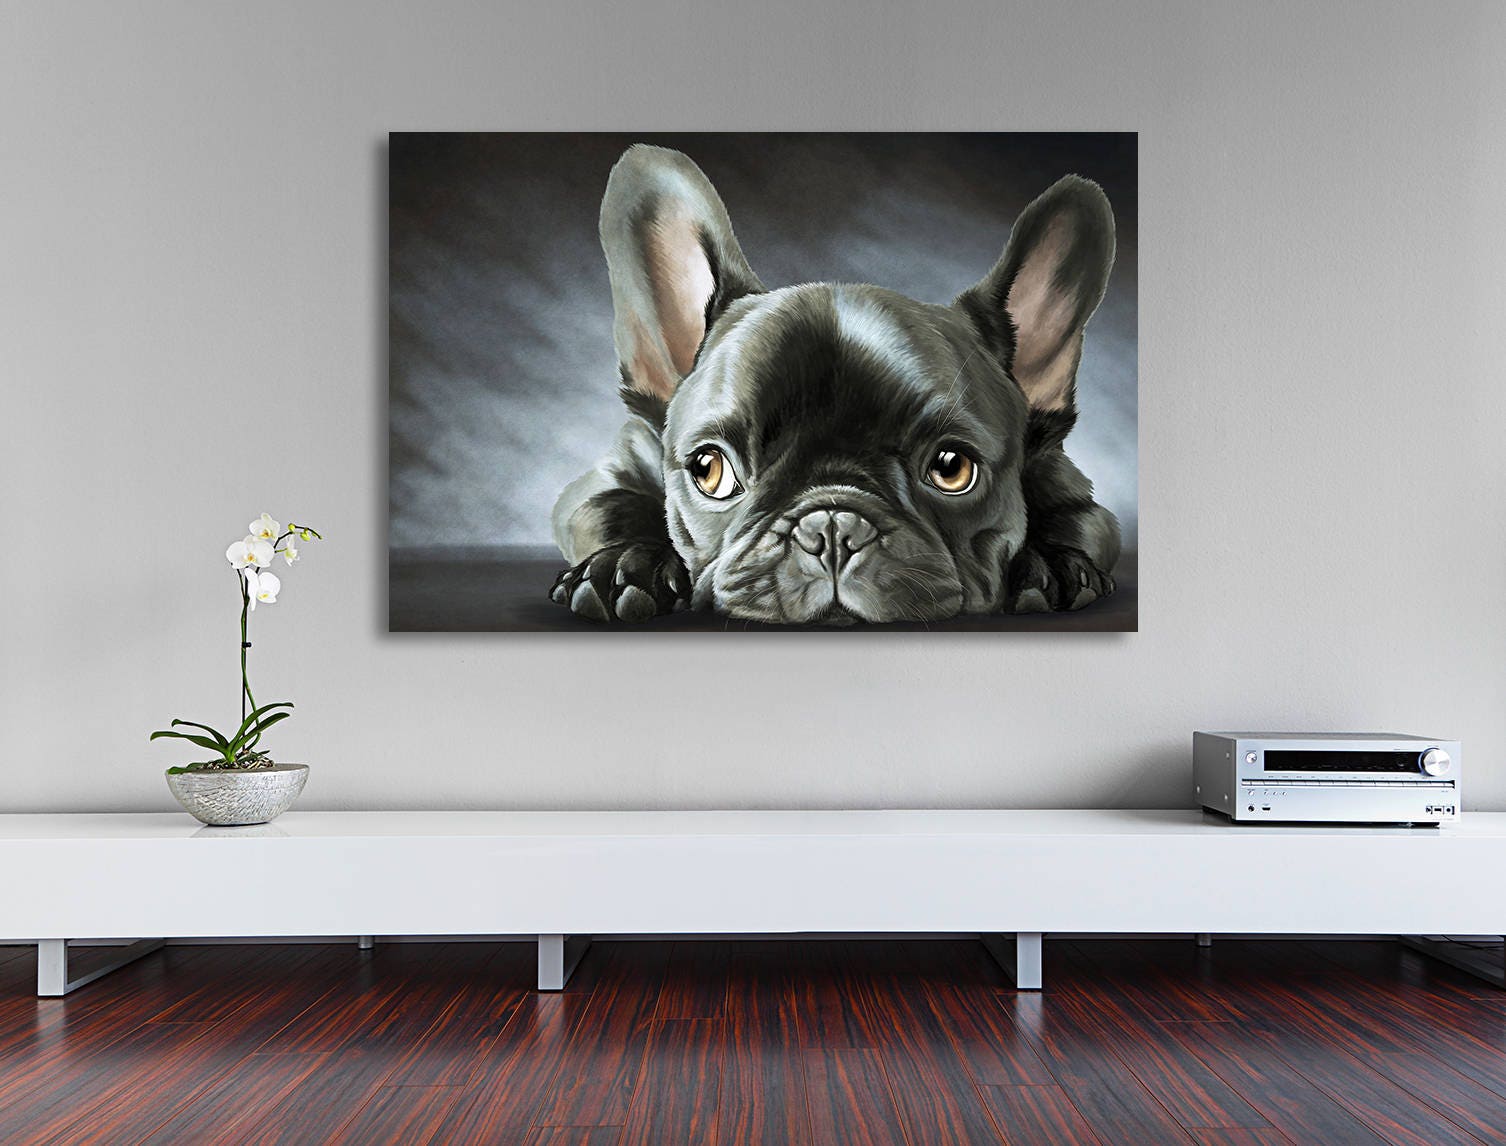 Frenchie French bulldog breed print on canvas | Etsy